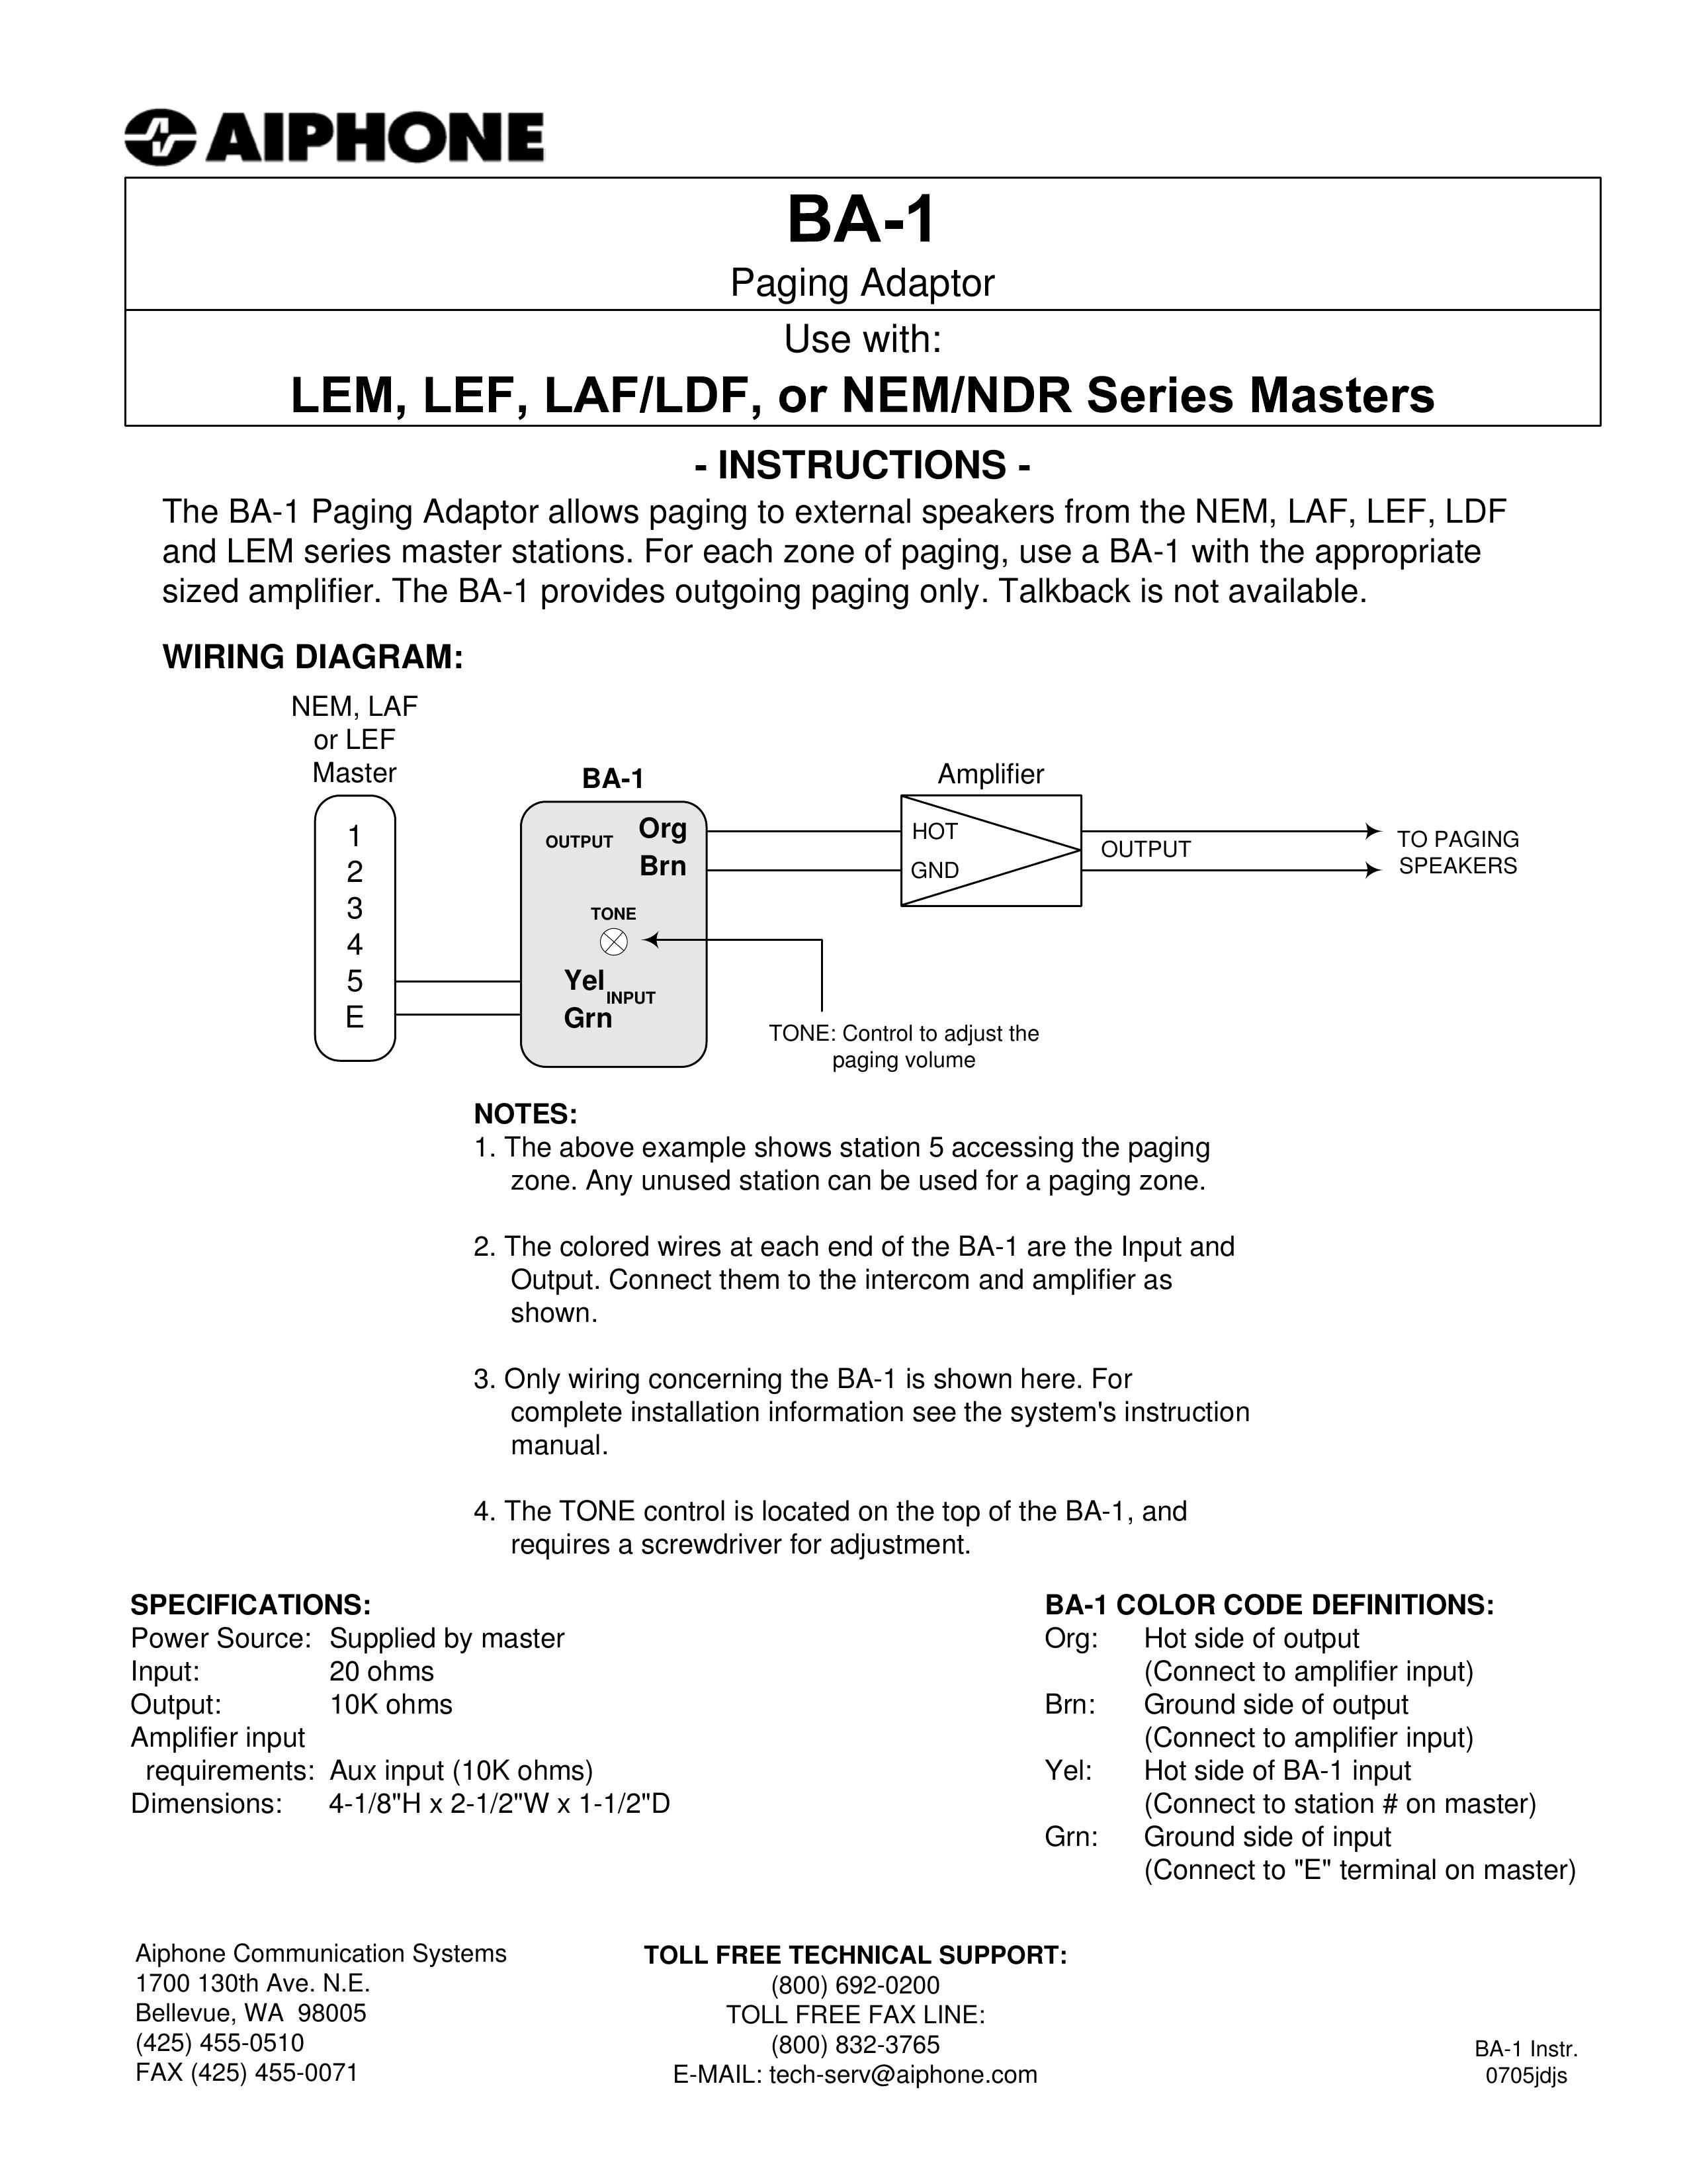 Aiphone LAF/LDF Marine RADAR User Manual